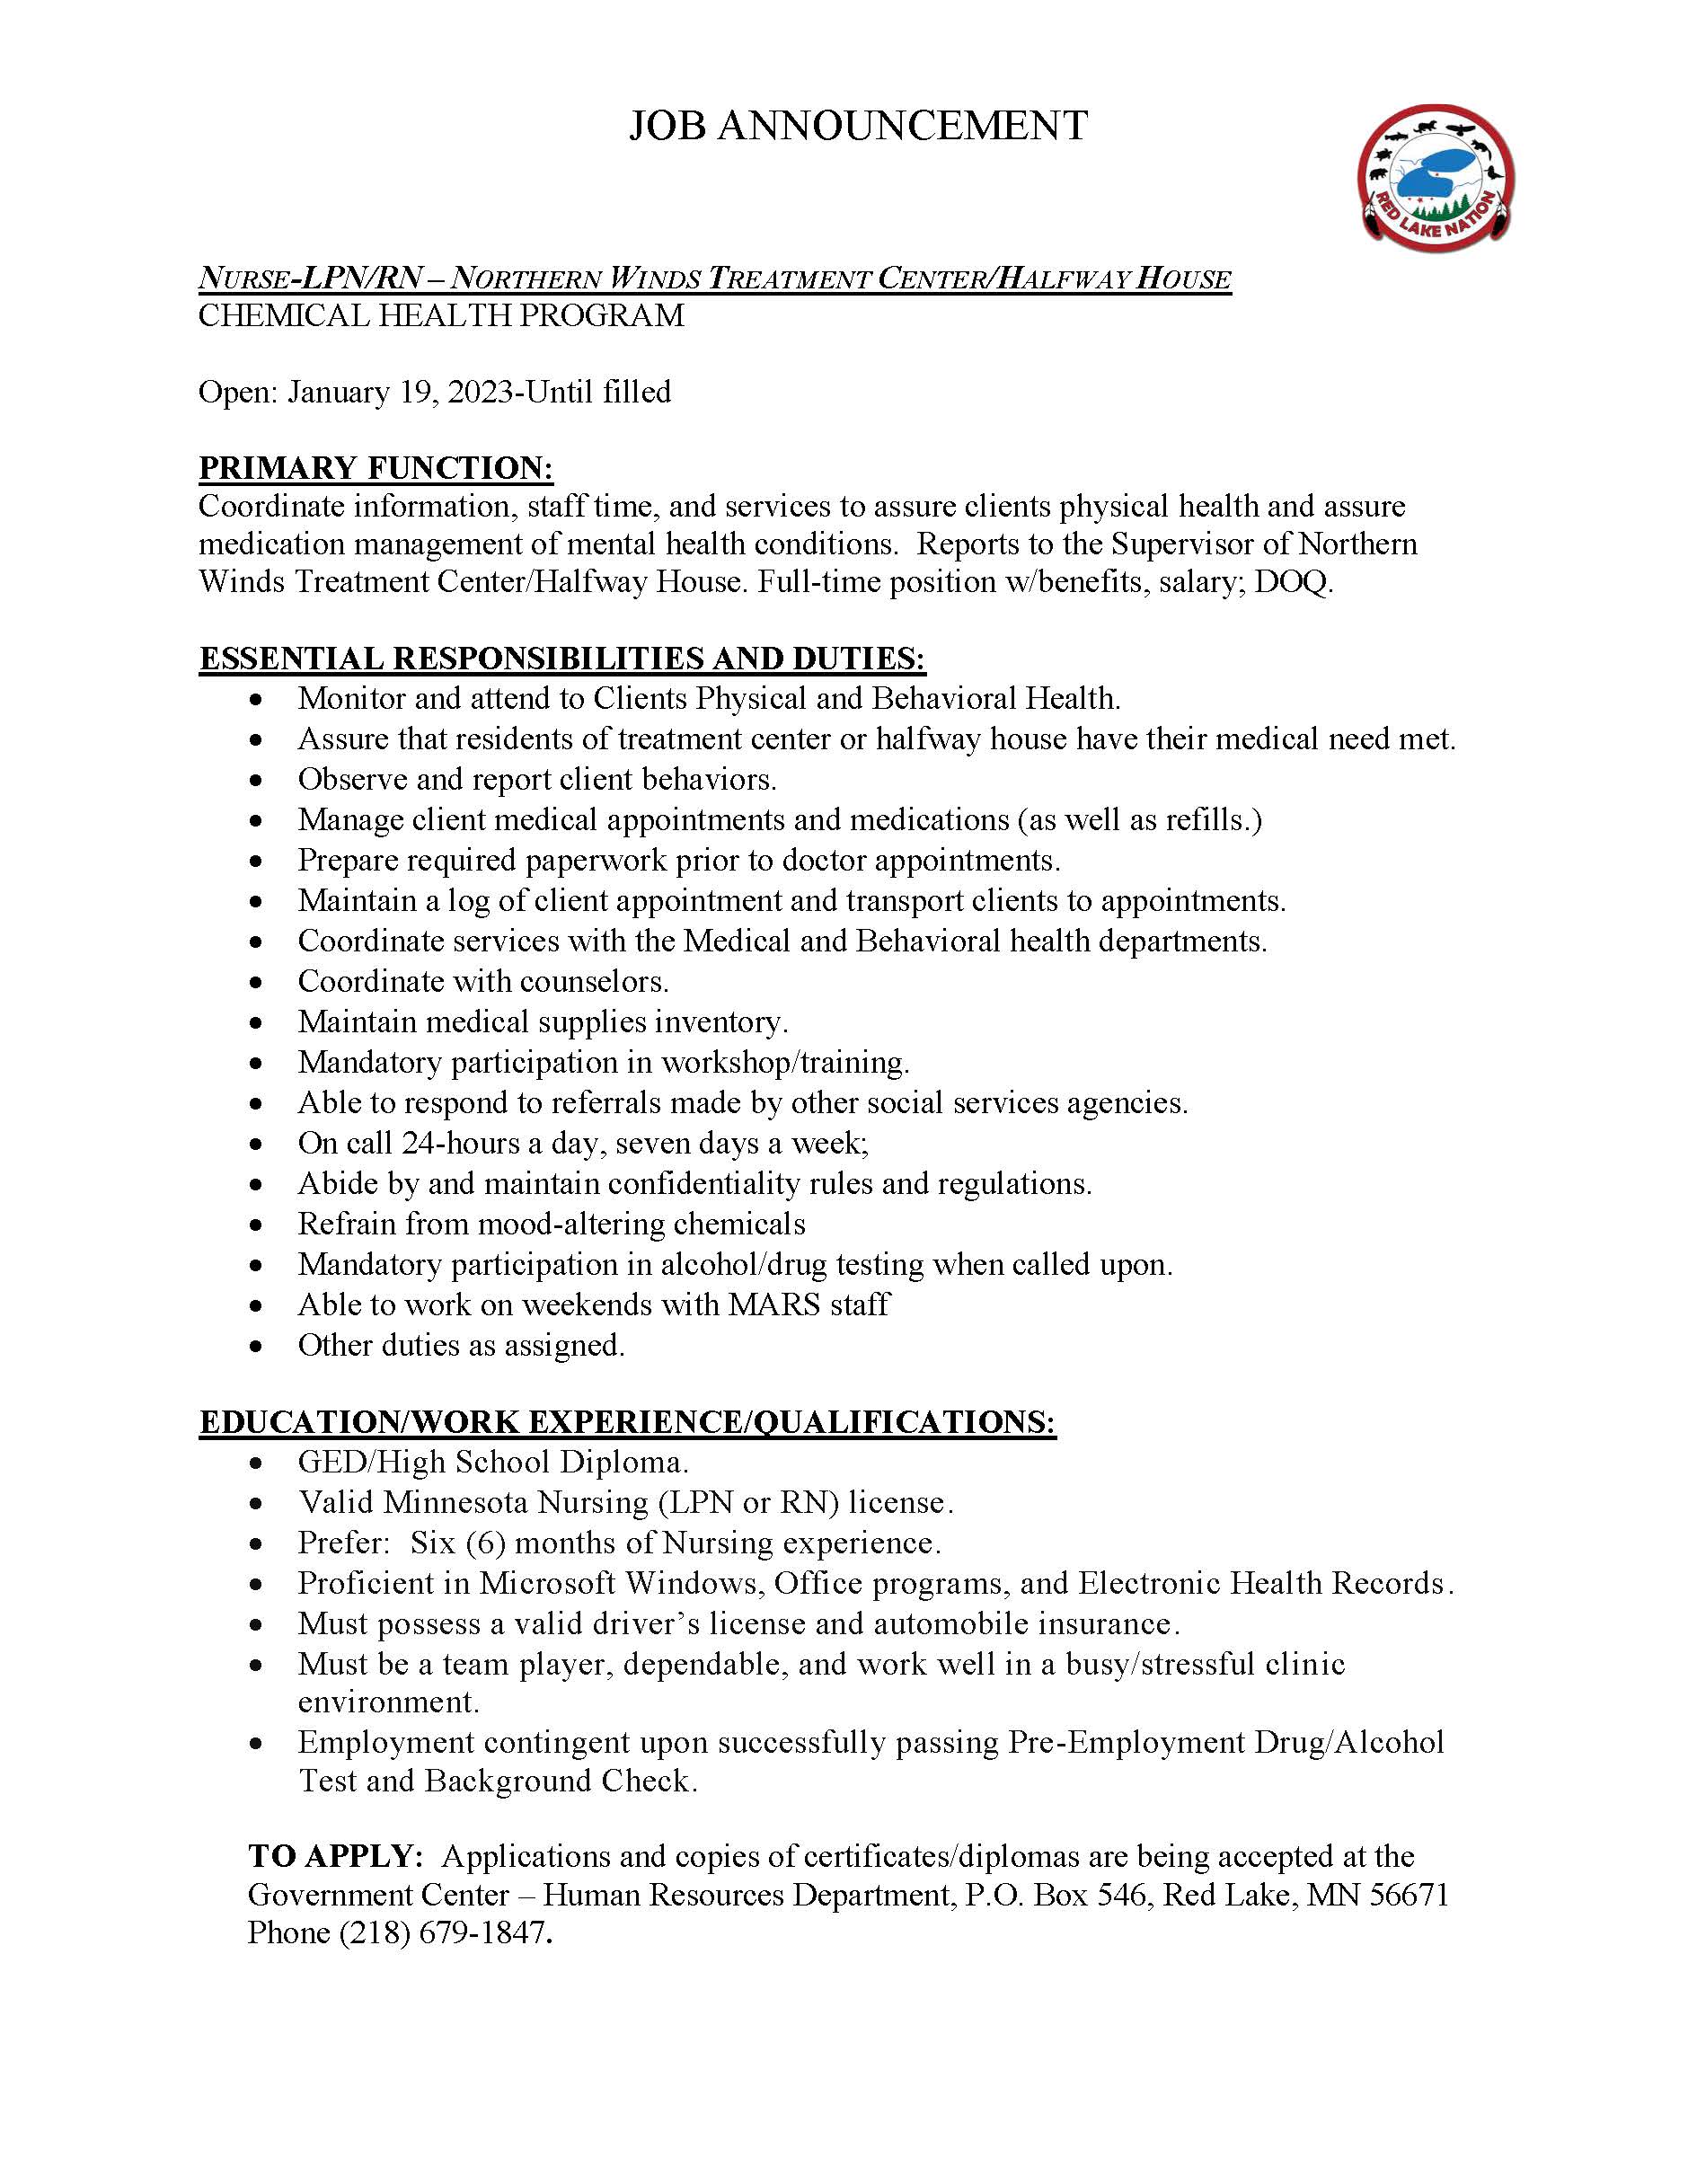 Nurse LPN RN-NWTC-Chemcial Health Program-Job Posting 1-19-23